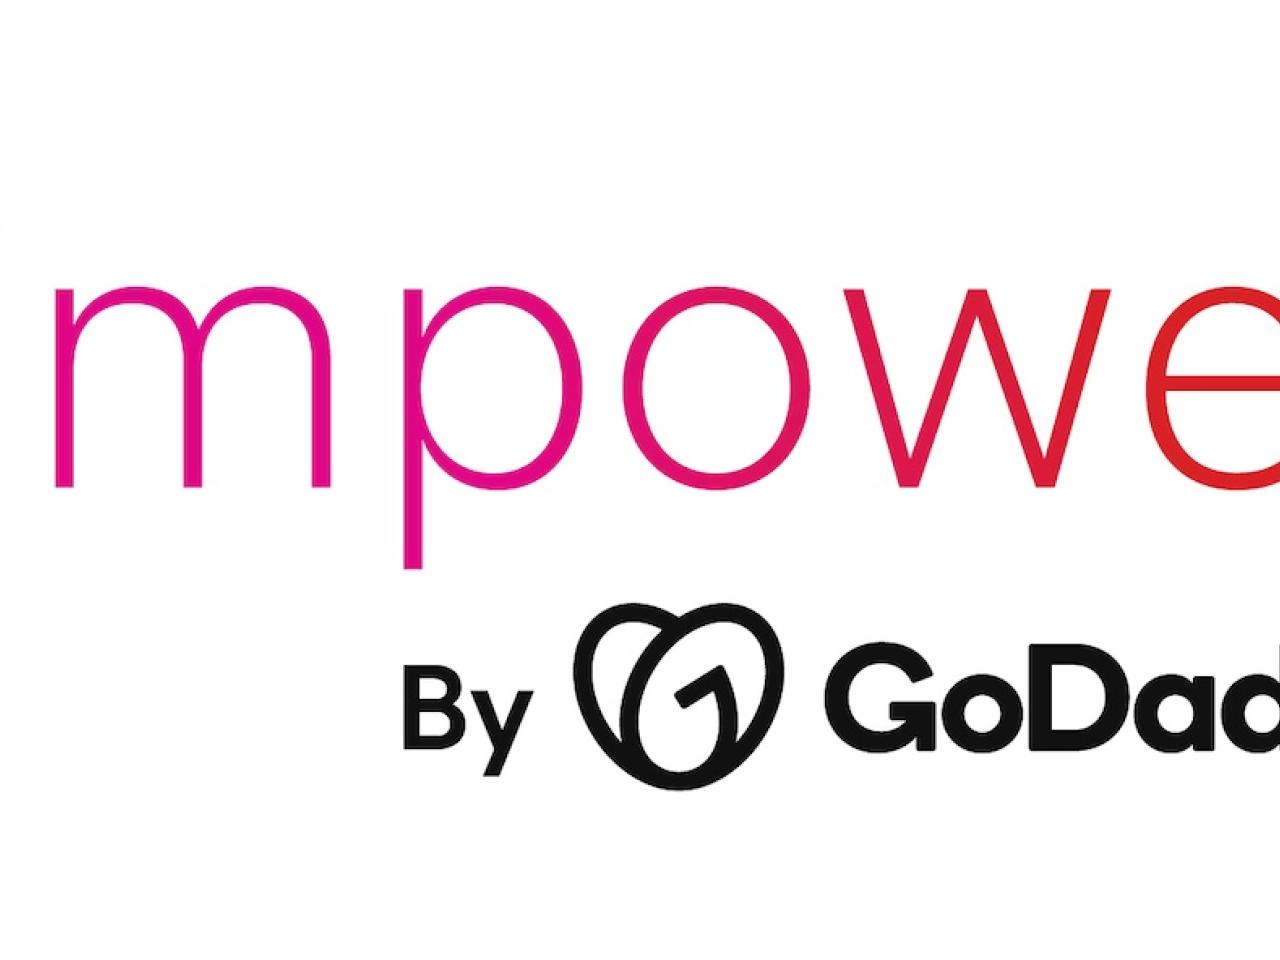 Empower by GoDaddy logo.